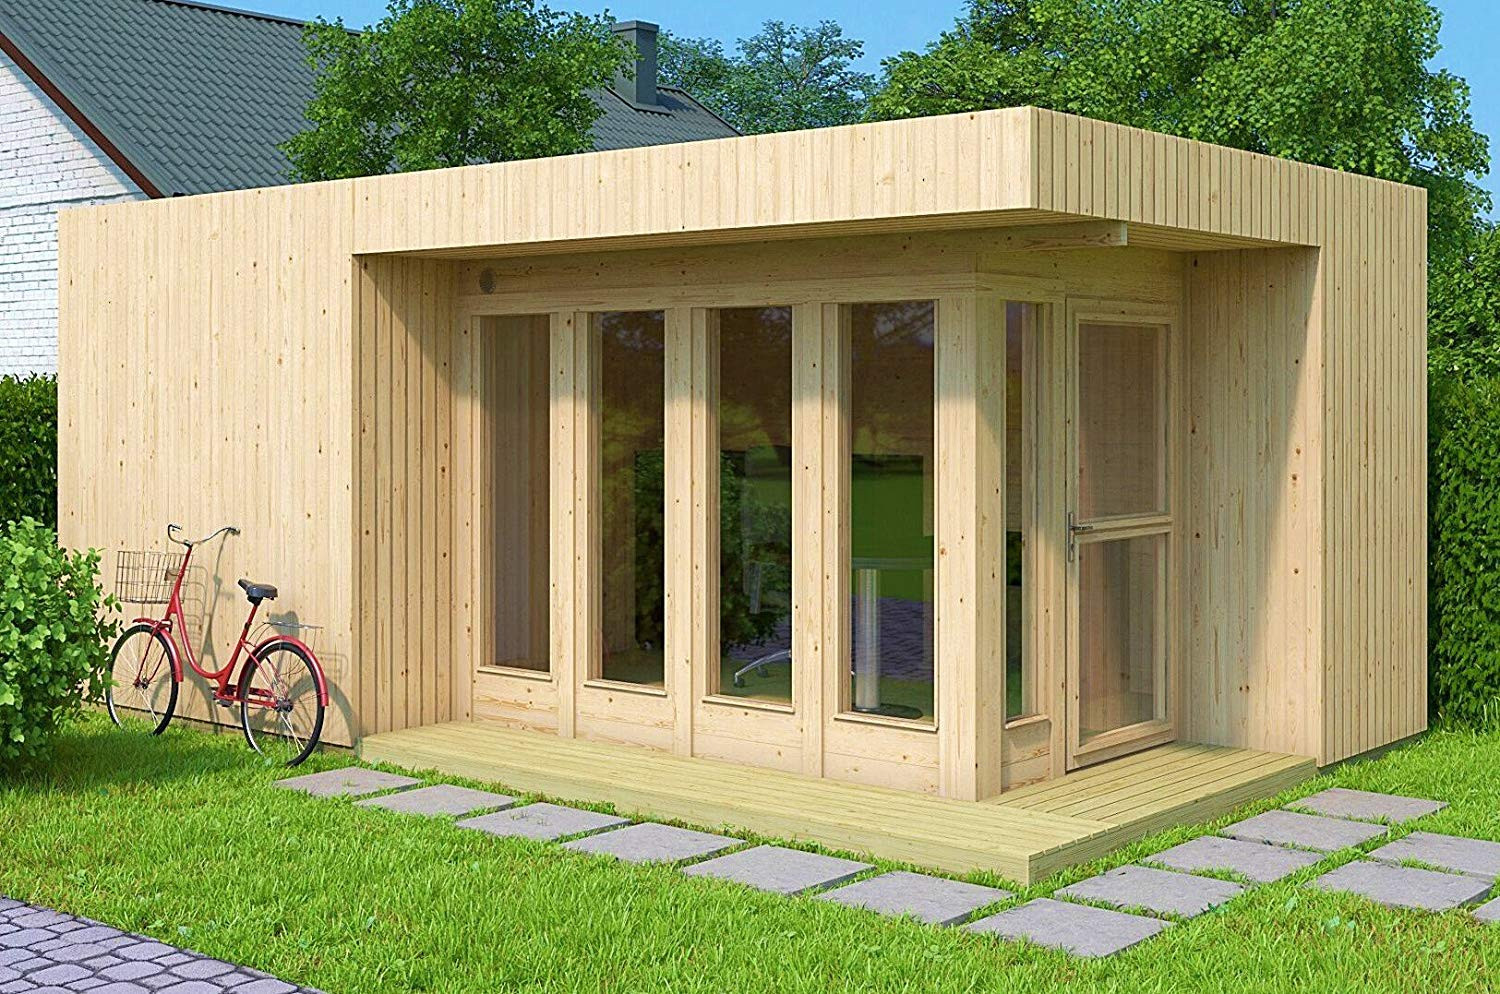 DIY Tiny Home Kits
 Amazon sells a DIY tiny house kit you can build yourself